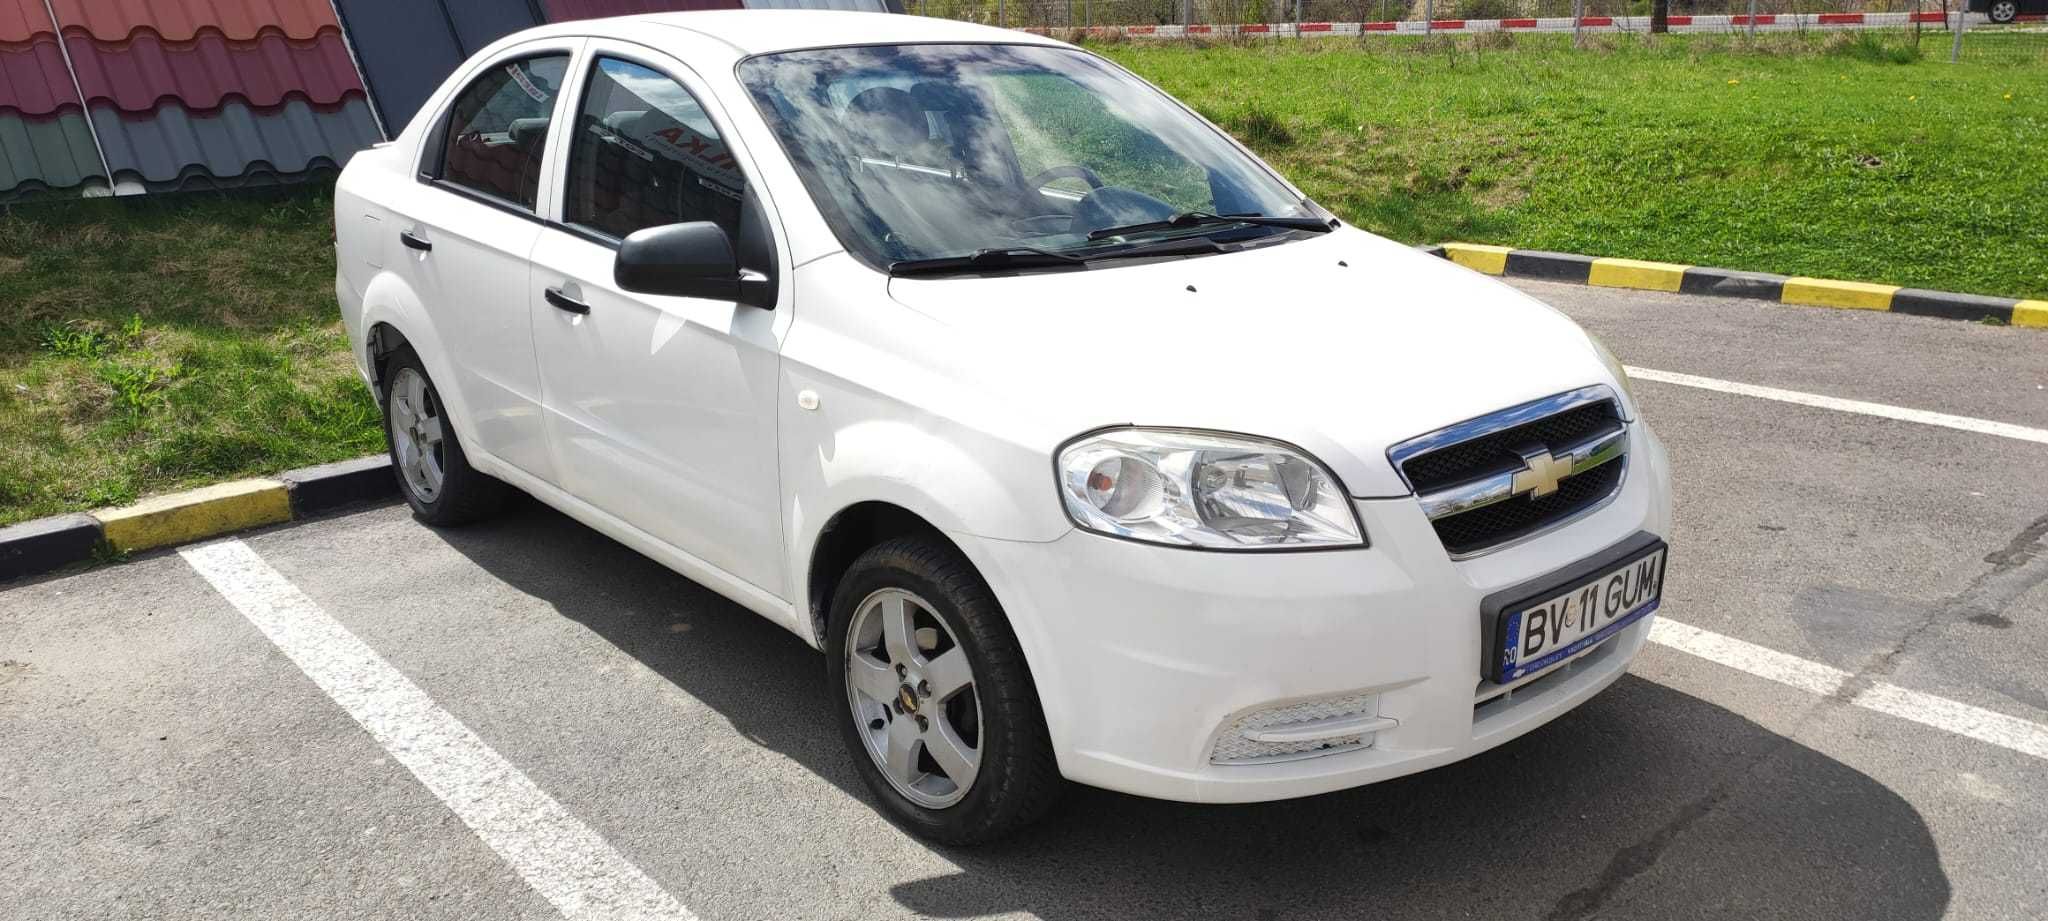 Chevrolet Aveo 2008 – 1.4 Benzina, 94 cp – 147287 km